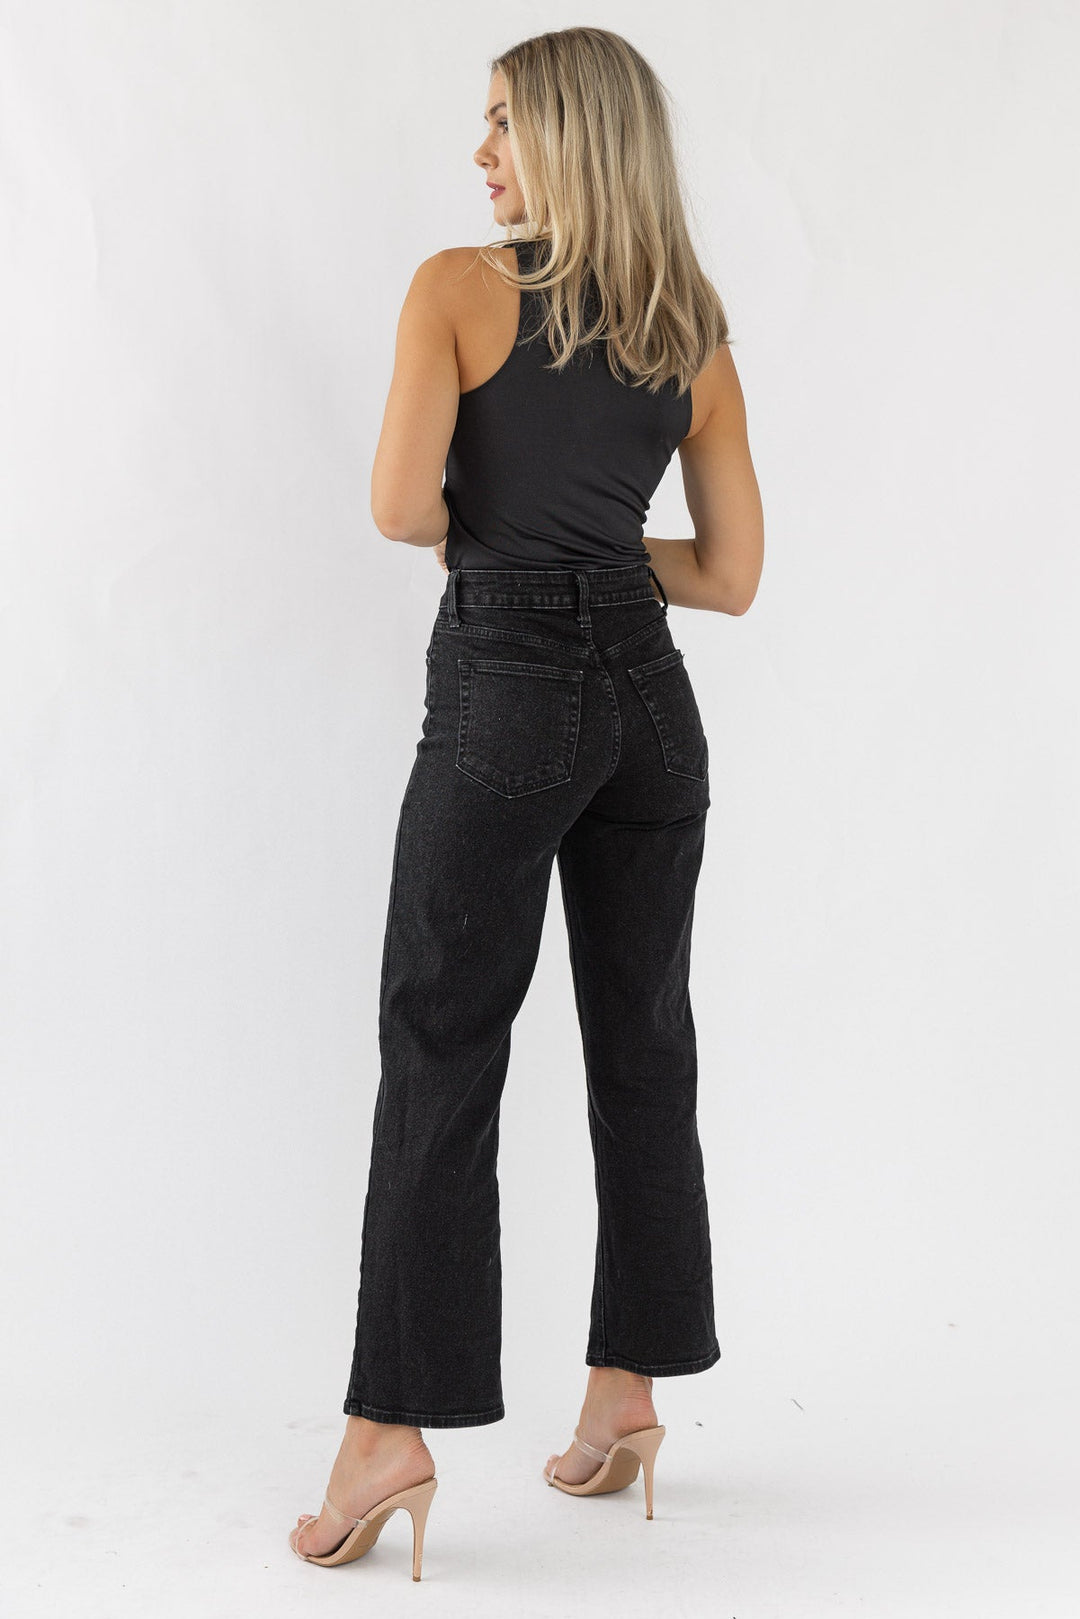 Dalia Sleeveless Bodysuit - Black - JO+CO